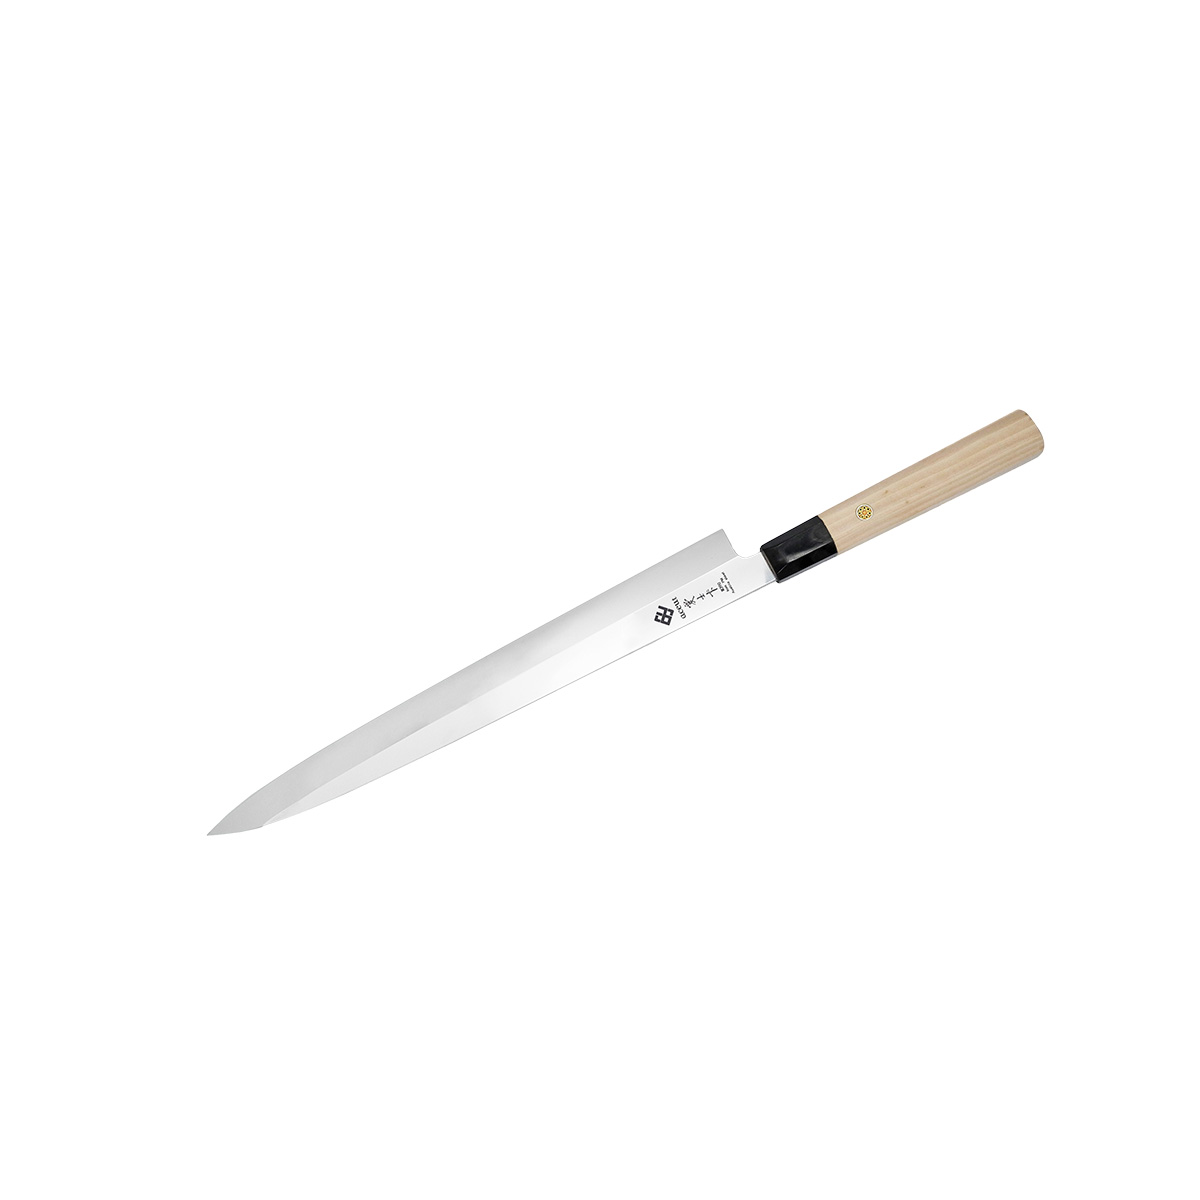 aceut愛士卡頂級刀具::24公分柳刃-m390 全鋼八角朴木柄愛士卡頂級廚刀